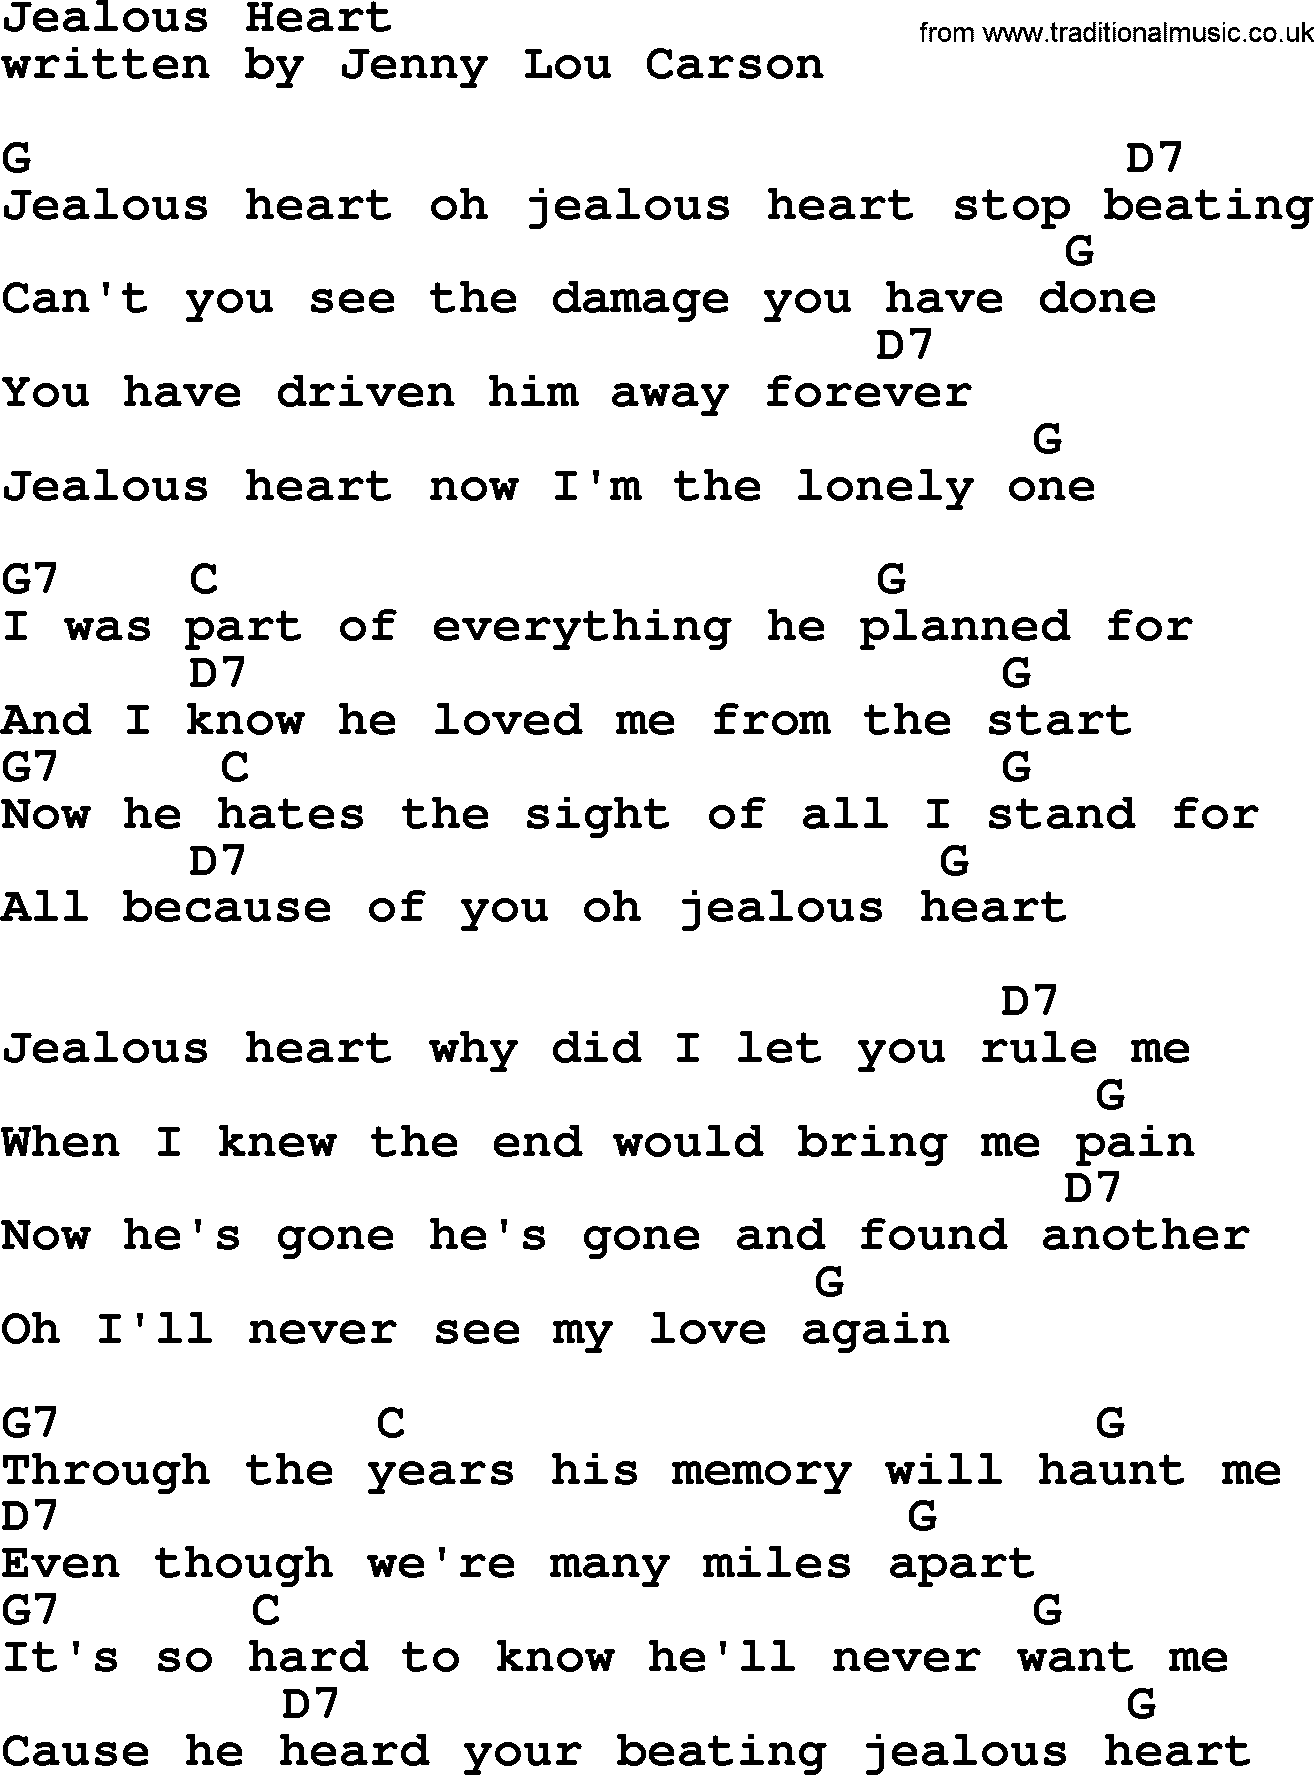 Loretta Lynn song: Jealous Heart lyrics and chords